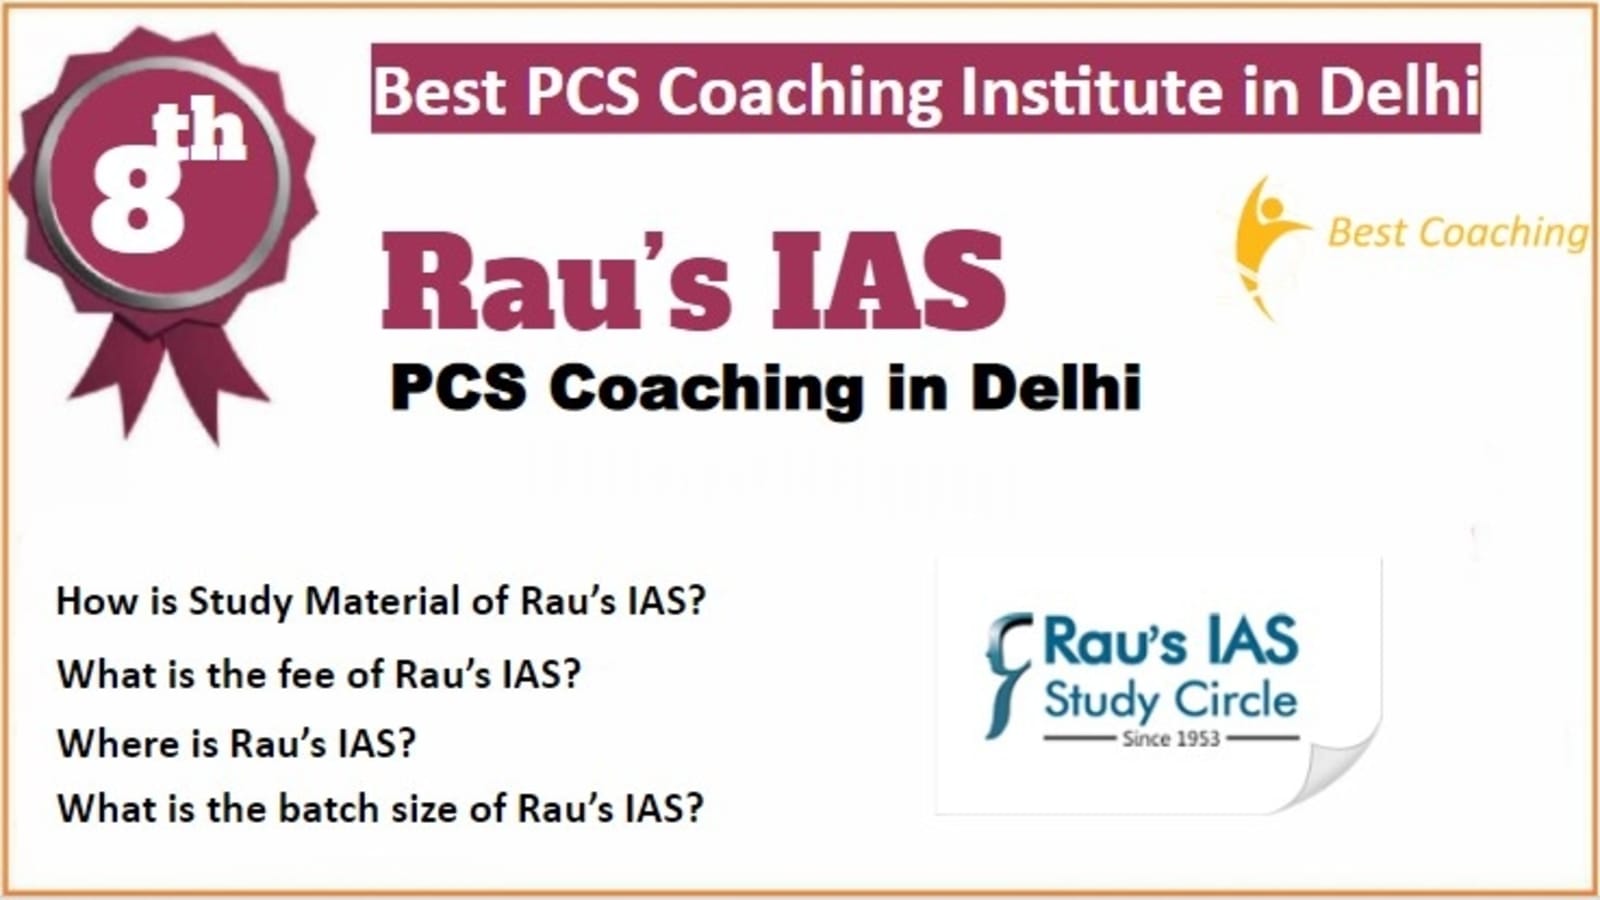 Rank 8 Best PCS Coaching in Delhi